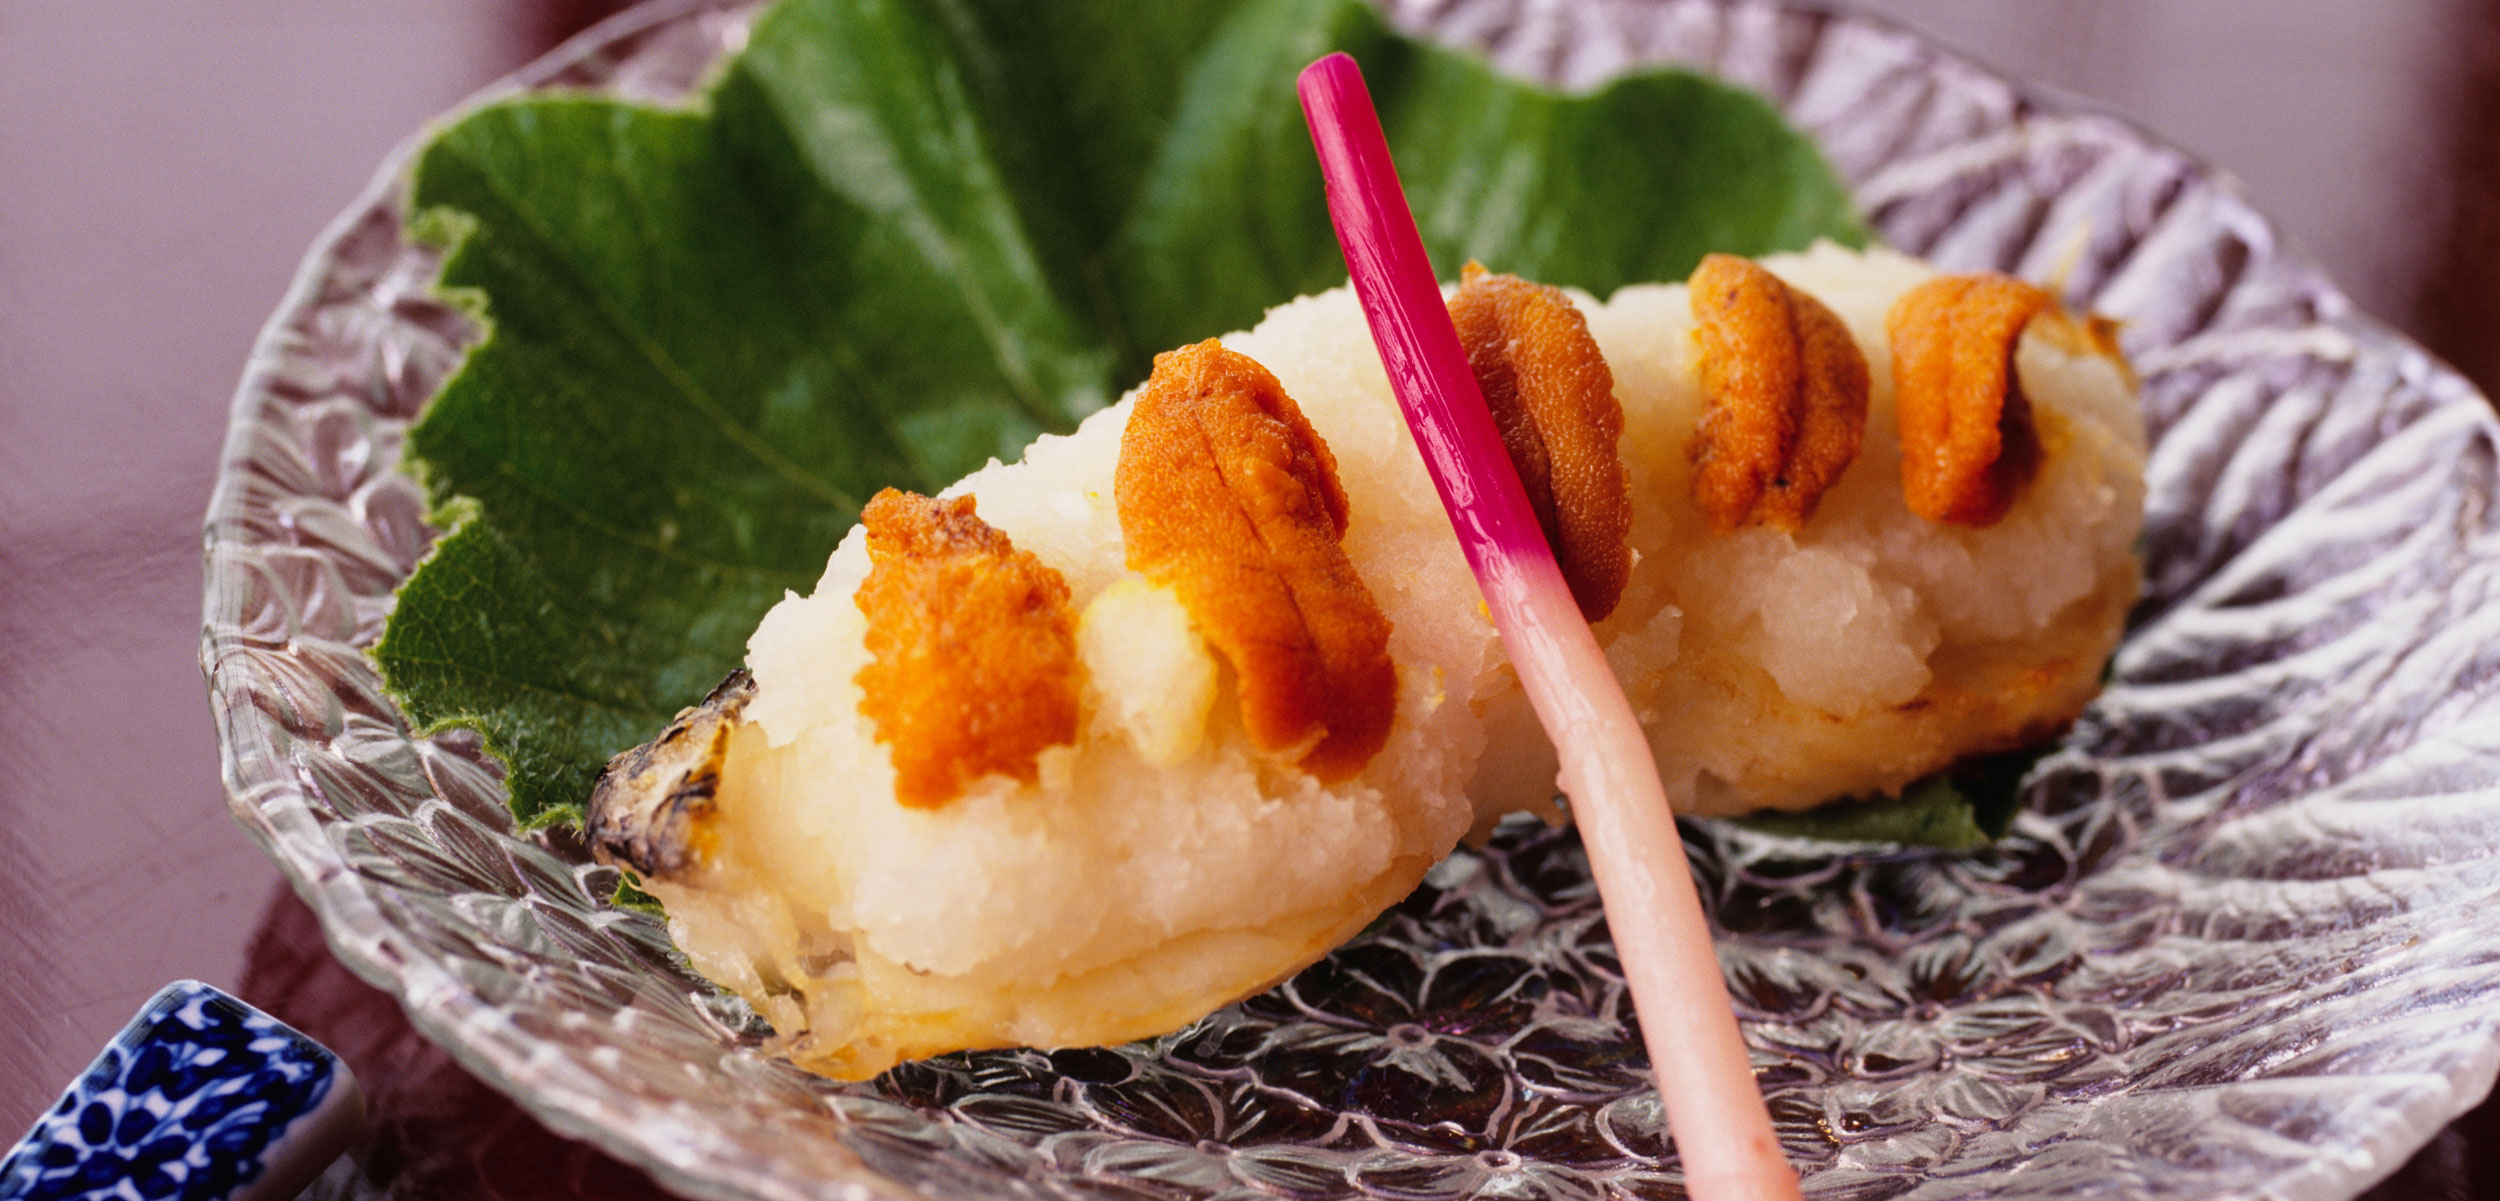 sea urchin on daikon radish